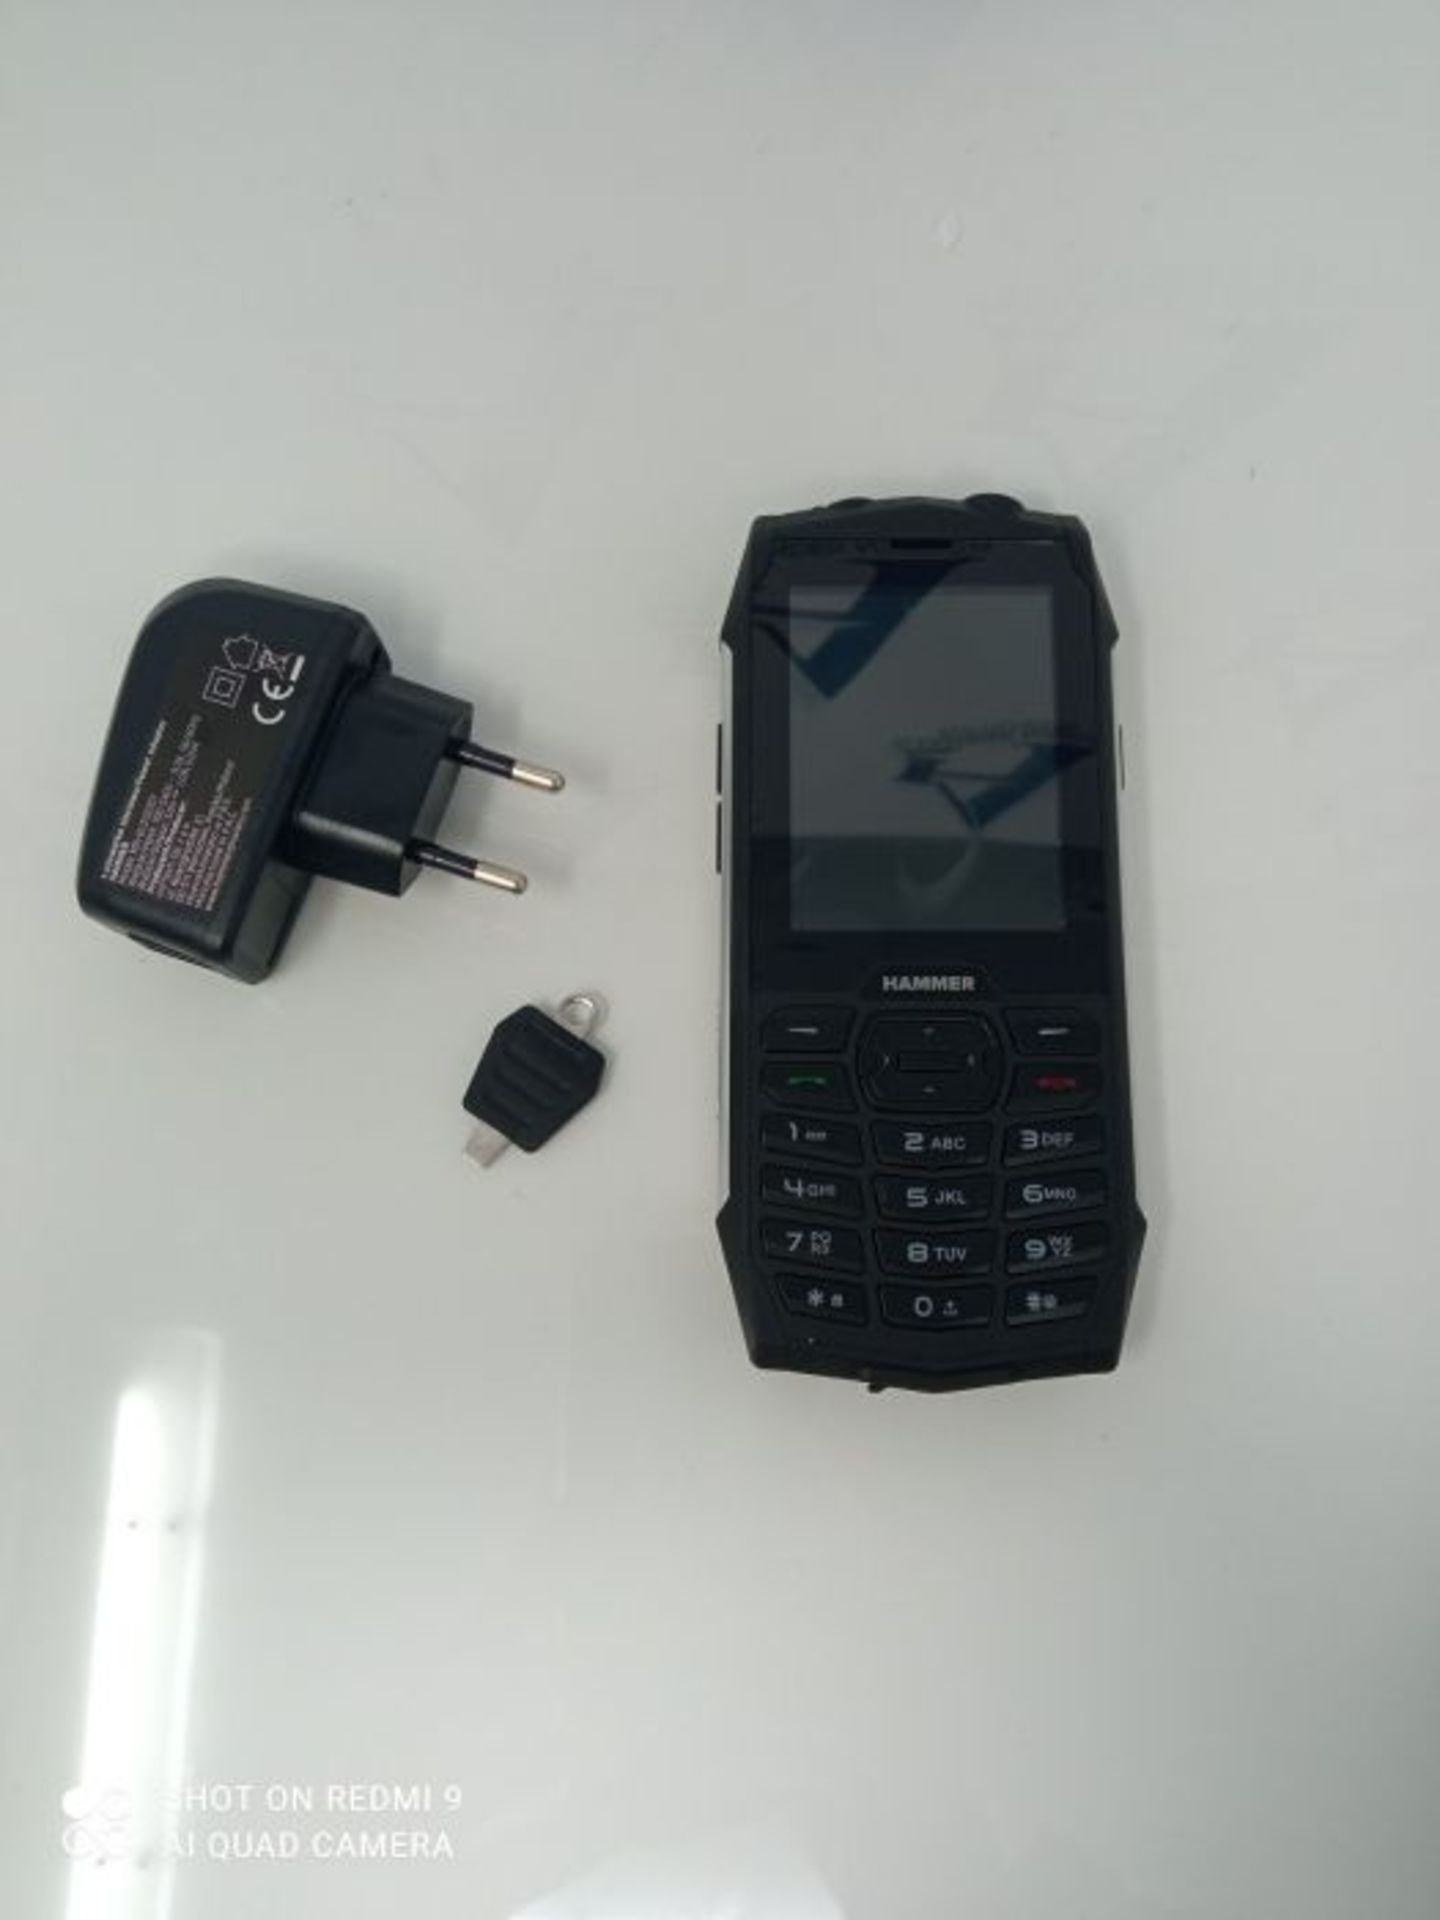 RRP £51.00 Myphone Hammer 4 Plata Móvil Resistente Ip68 Dual Sim 2.8'' Tft Cámara Bluetooth Rad - Image 3 of 3